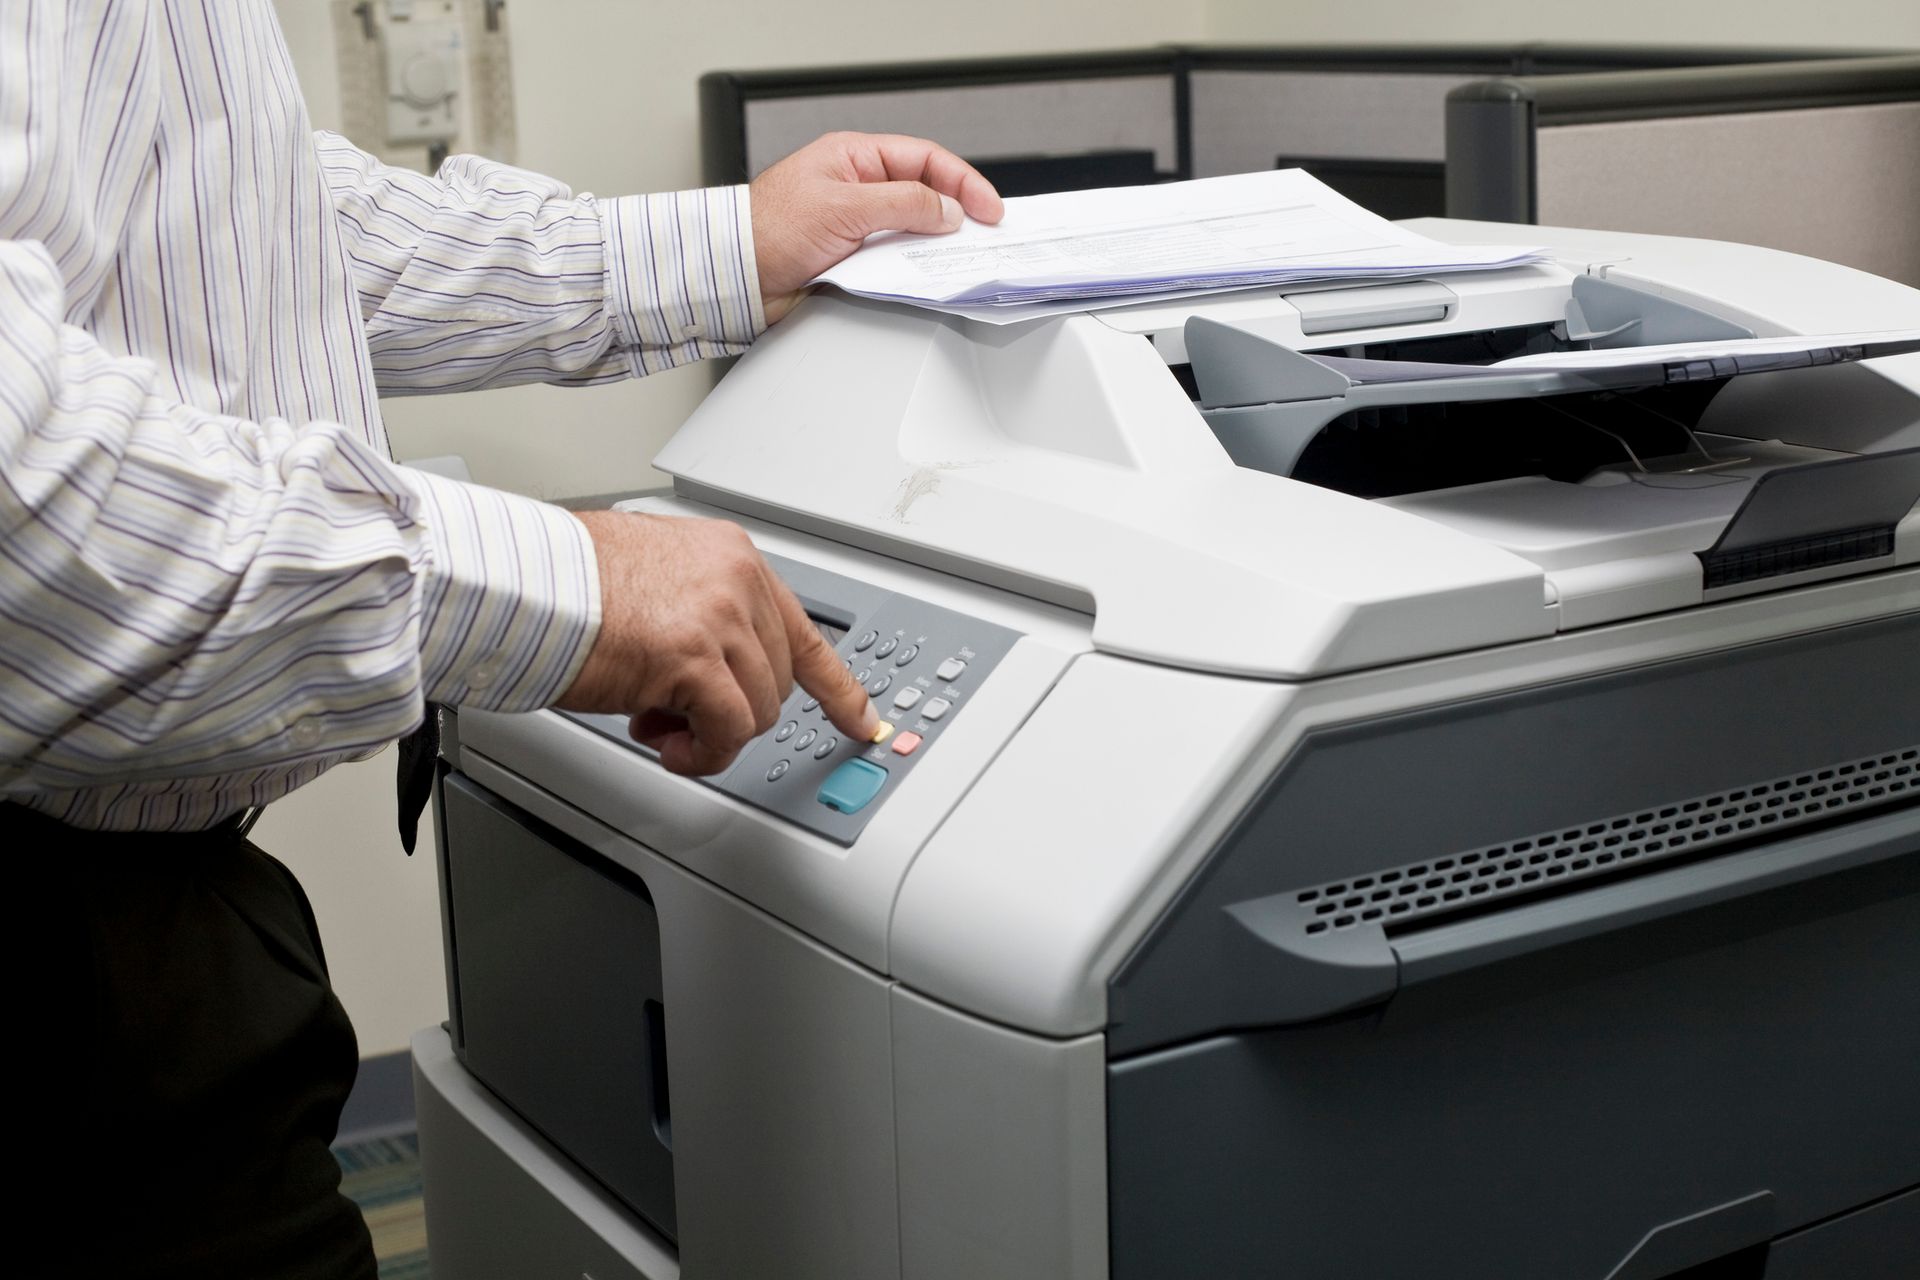 The Man use the Office Printer - Wayne, NJ - Reptronics